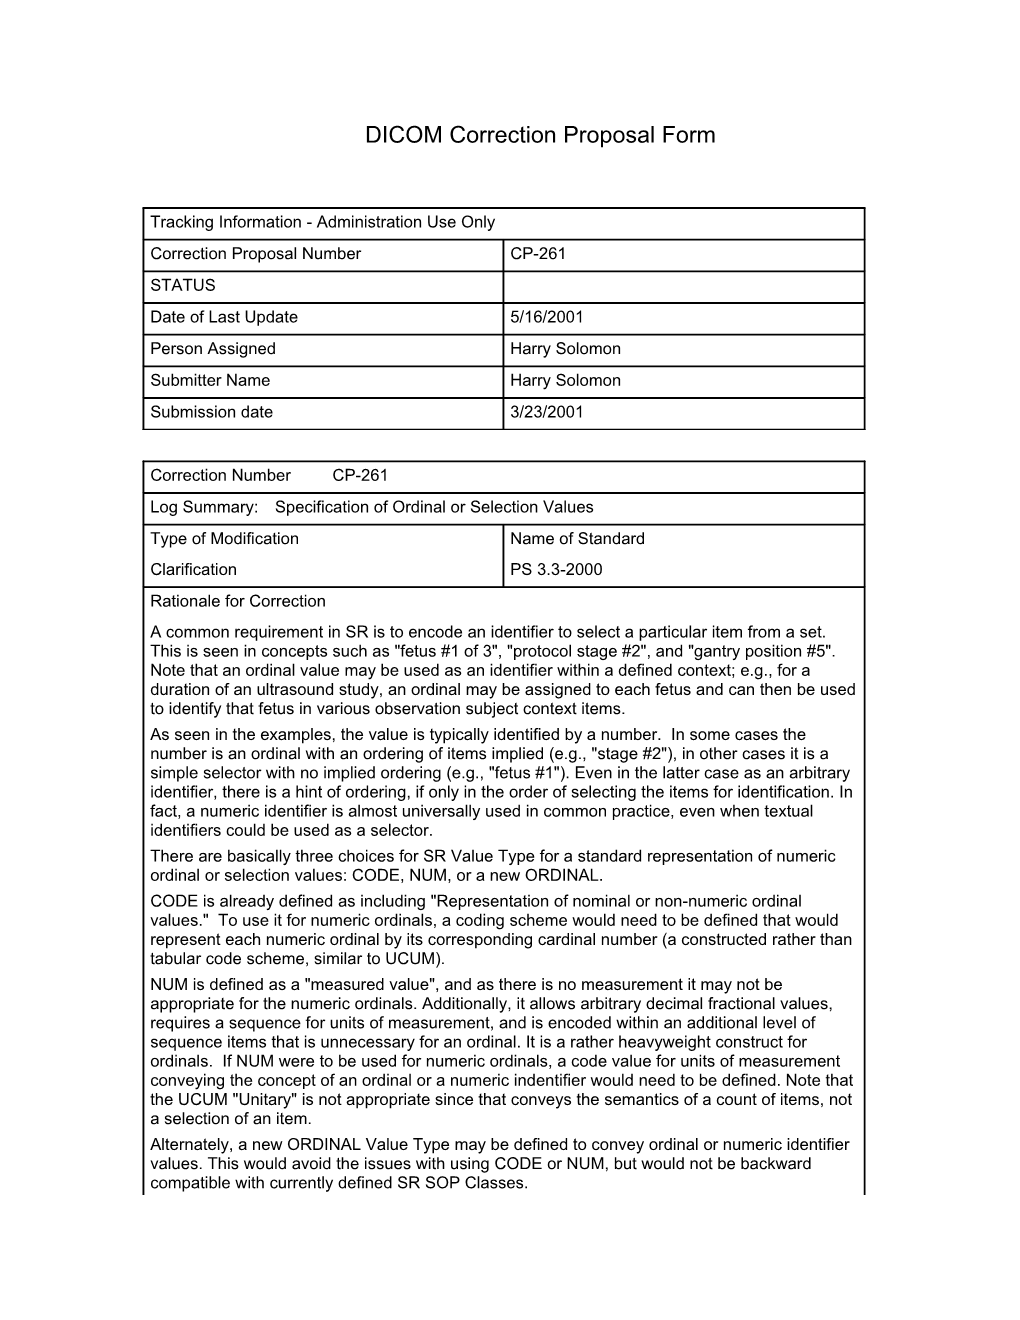 DICOM Correction Proposal Form s2